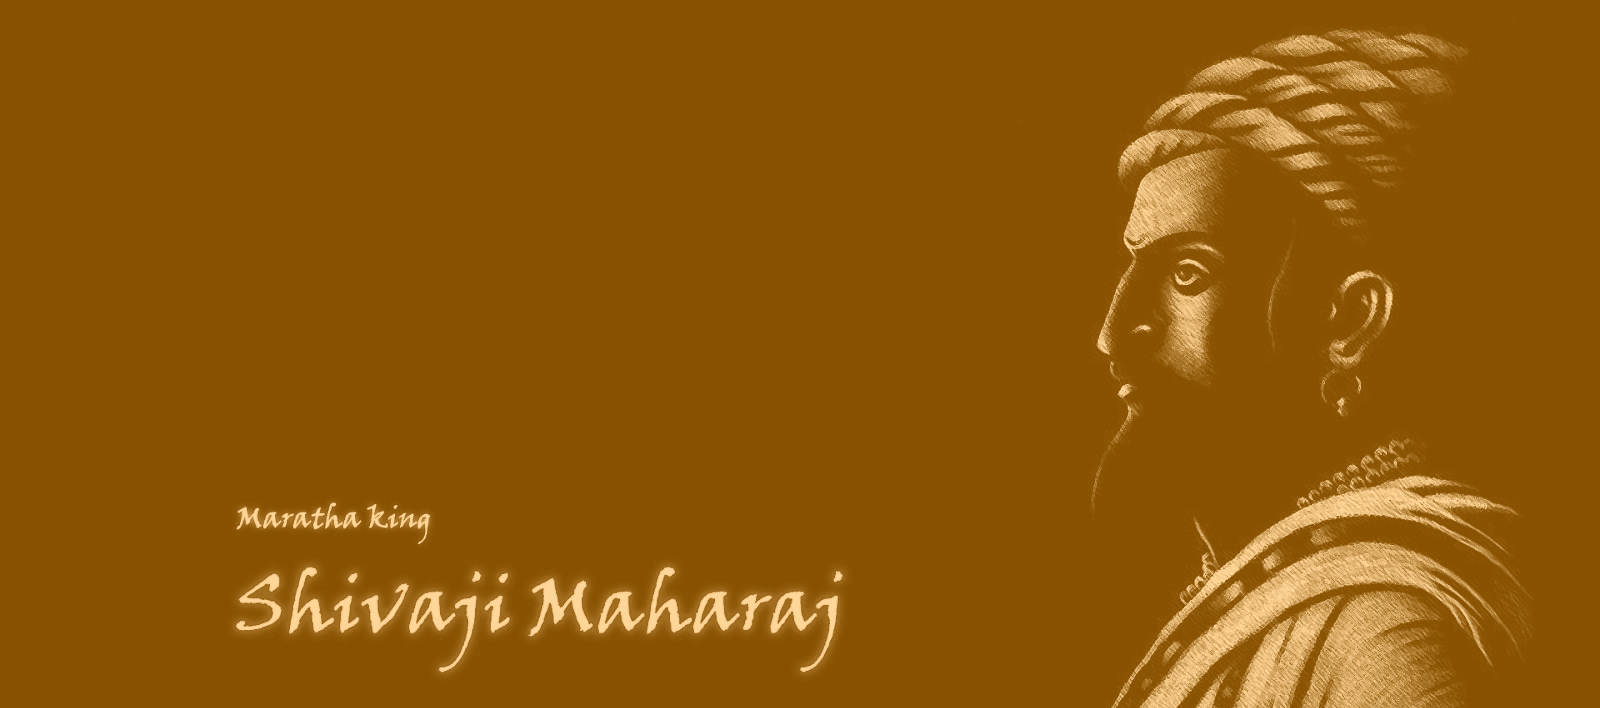 Shivaji Maharaj Hd Wallpaper For Facebook Cover - Hd Wallpaper Shivaji Maharaj , HD Wallpaper & Backgrounds